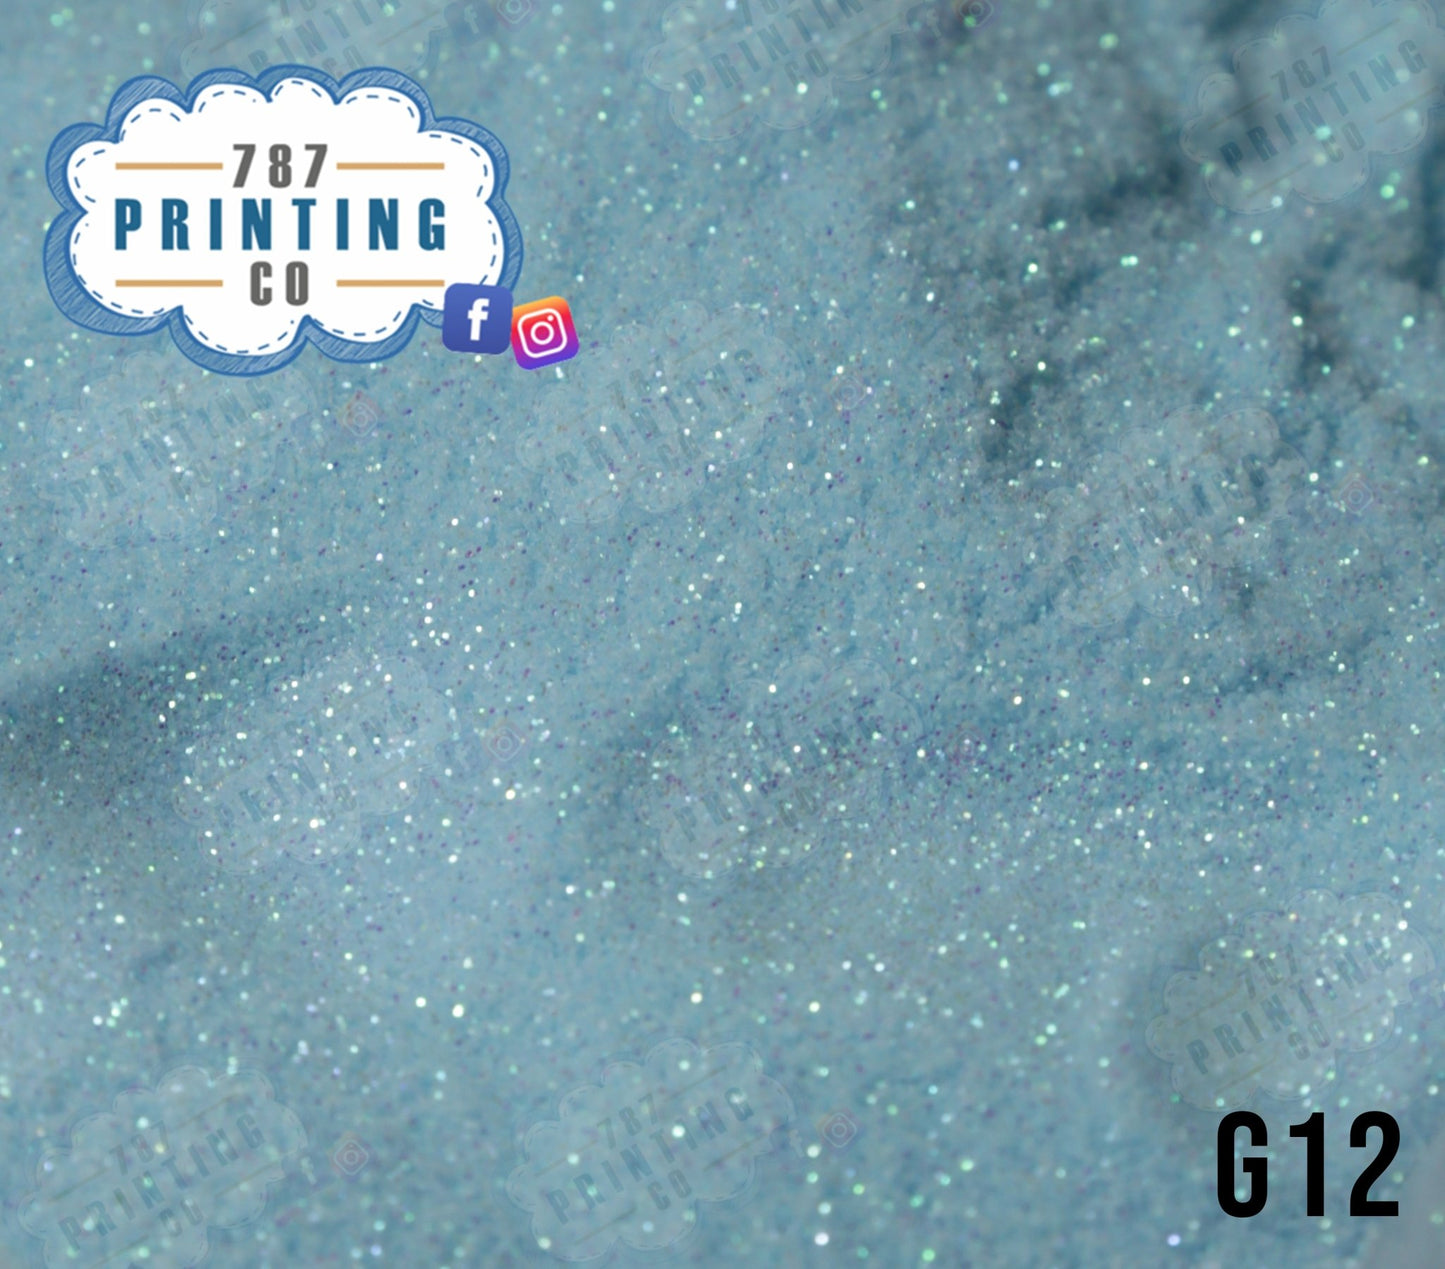 La Parguera Ultra Fine Glitter 1/128 (G12) - 787 Printing Co.